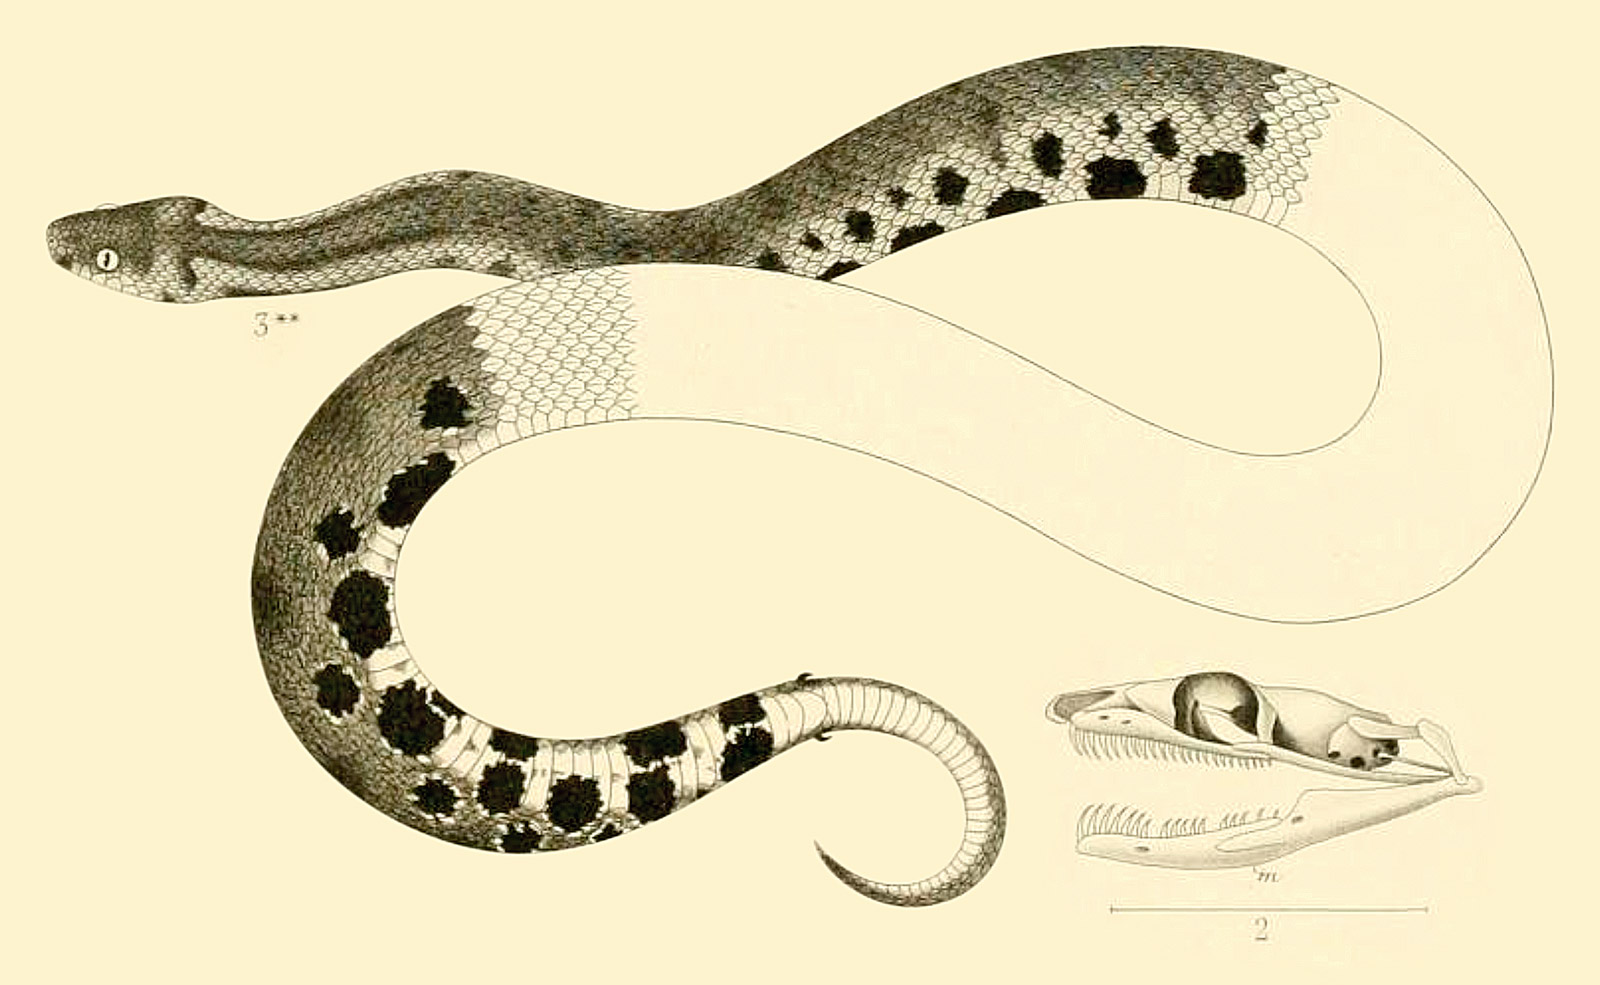 1861 illustration of a Southern Eyelash-Boa